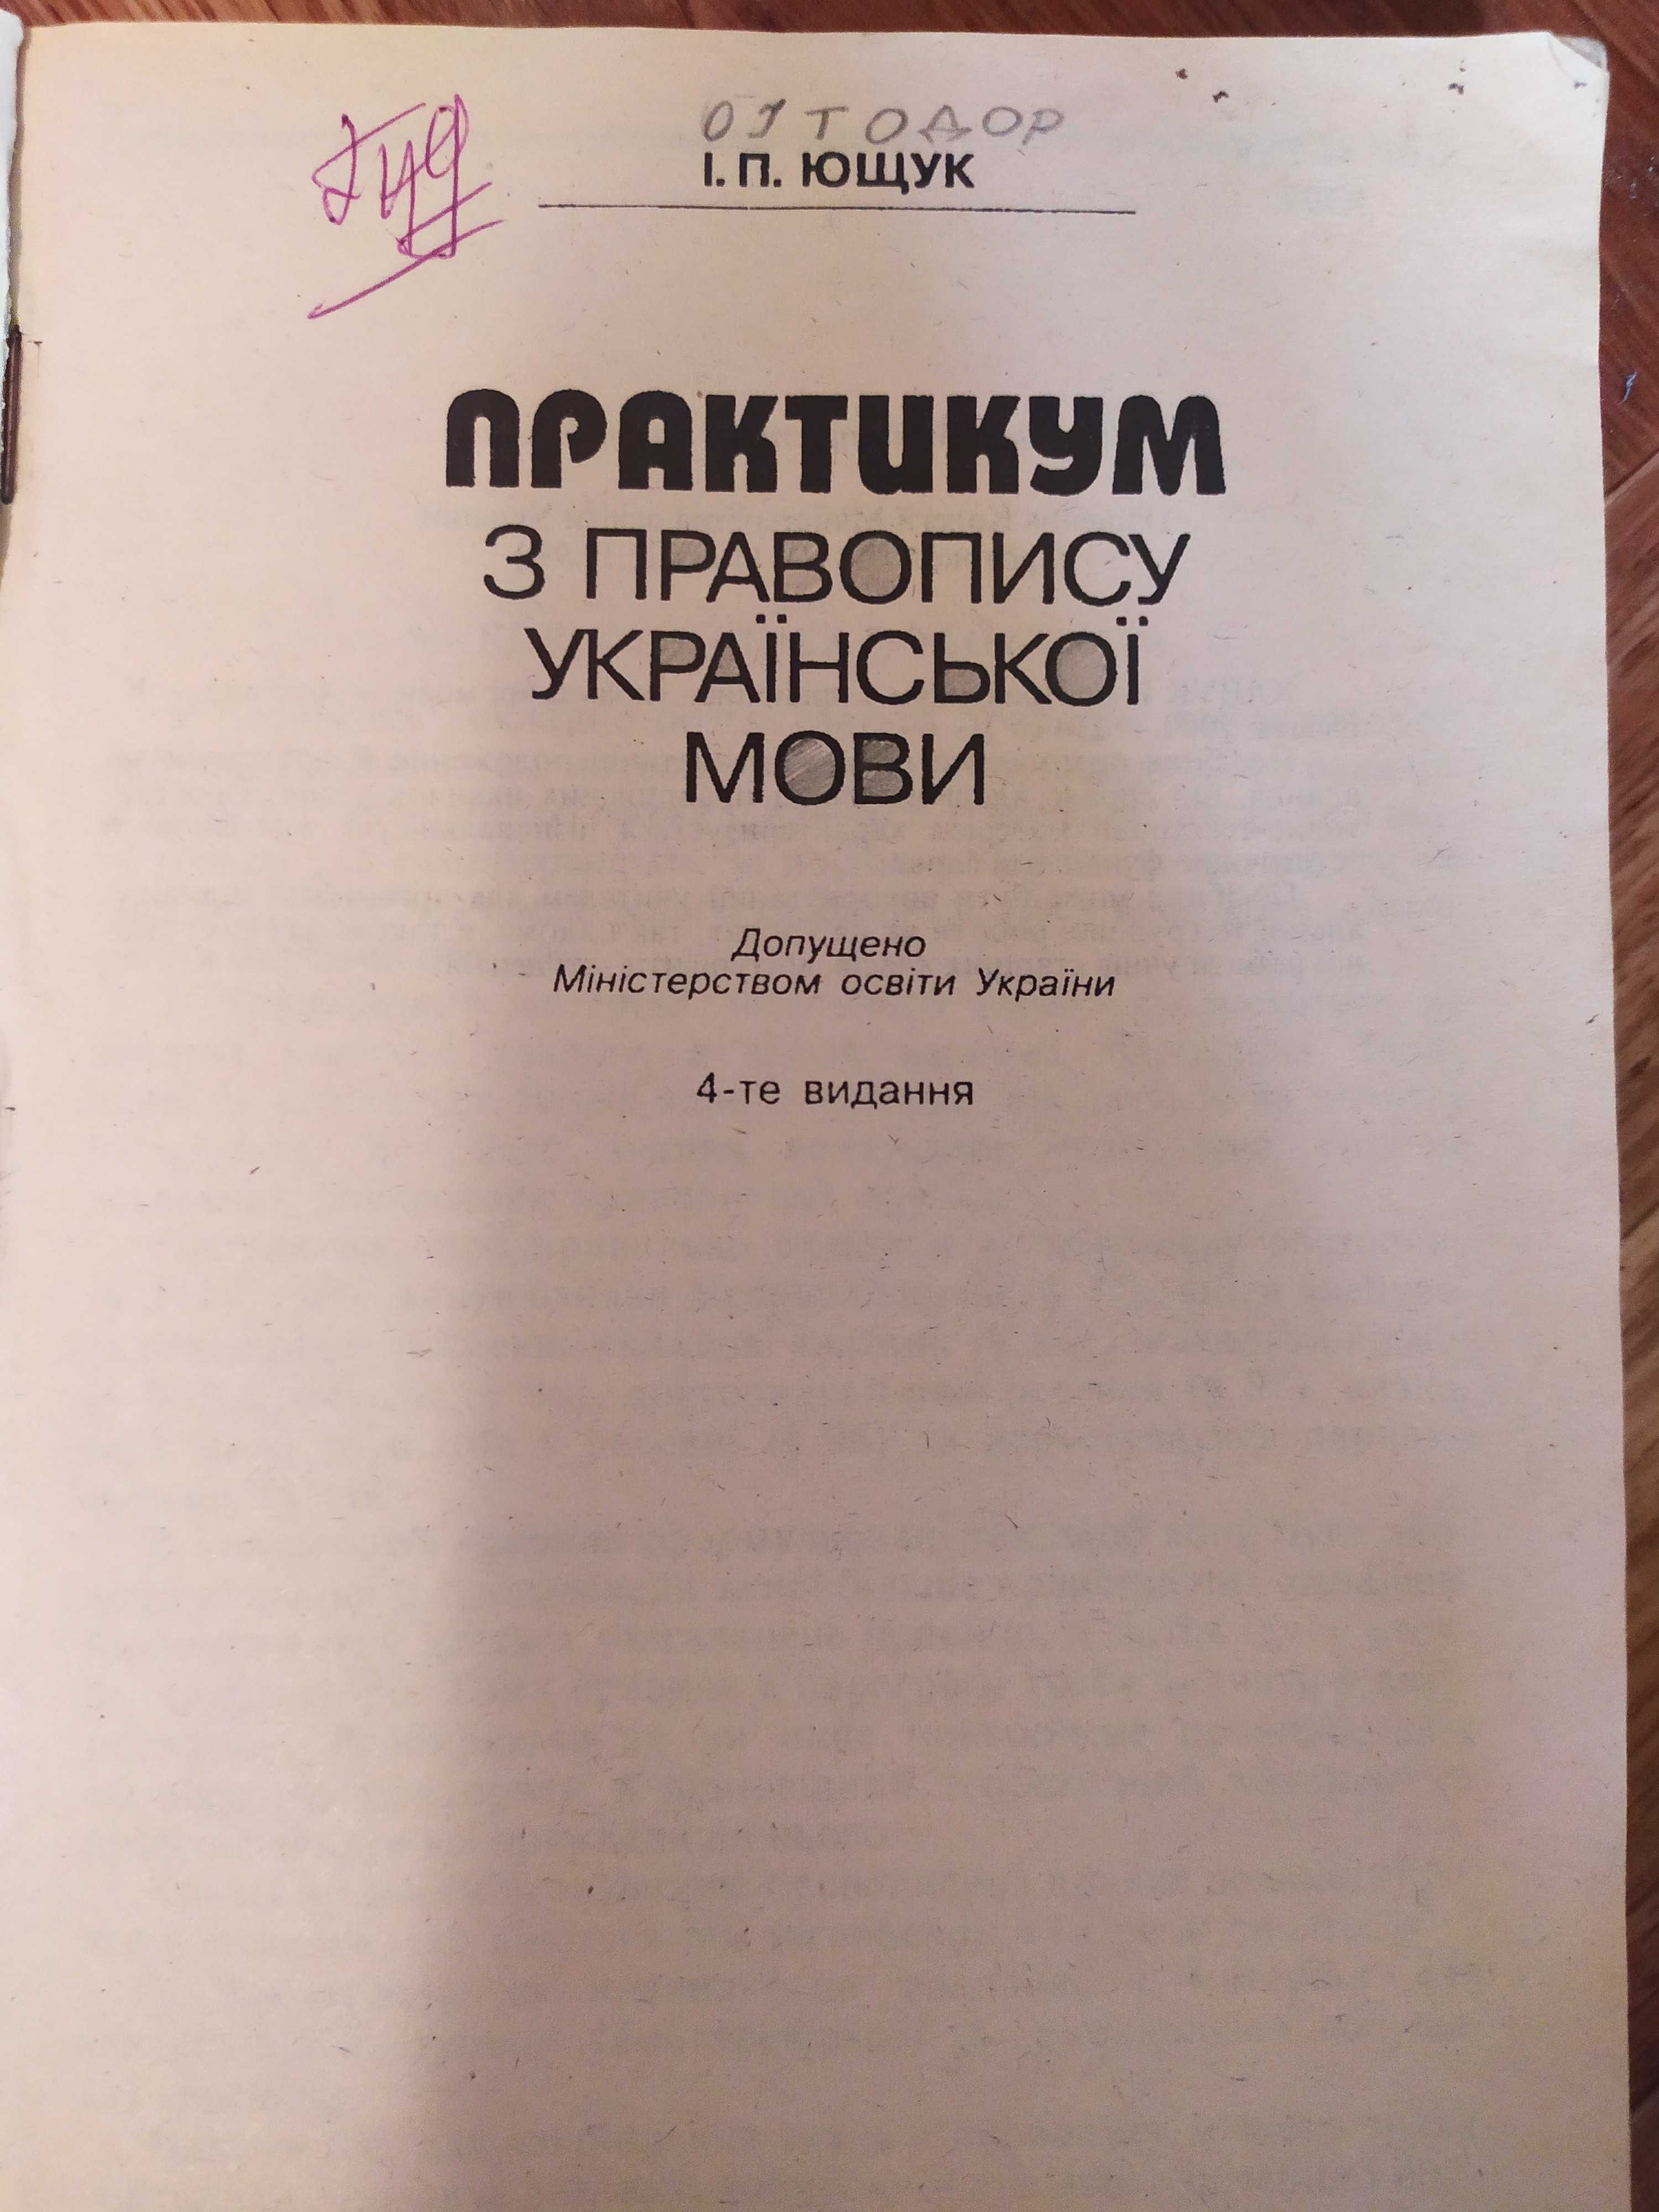 Практикум з правопису української мови